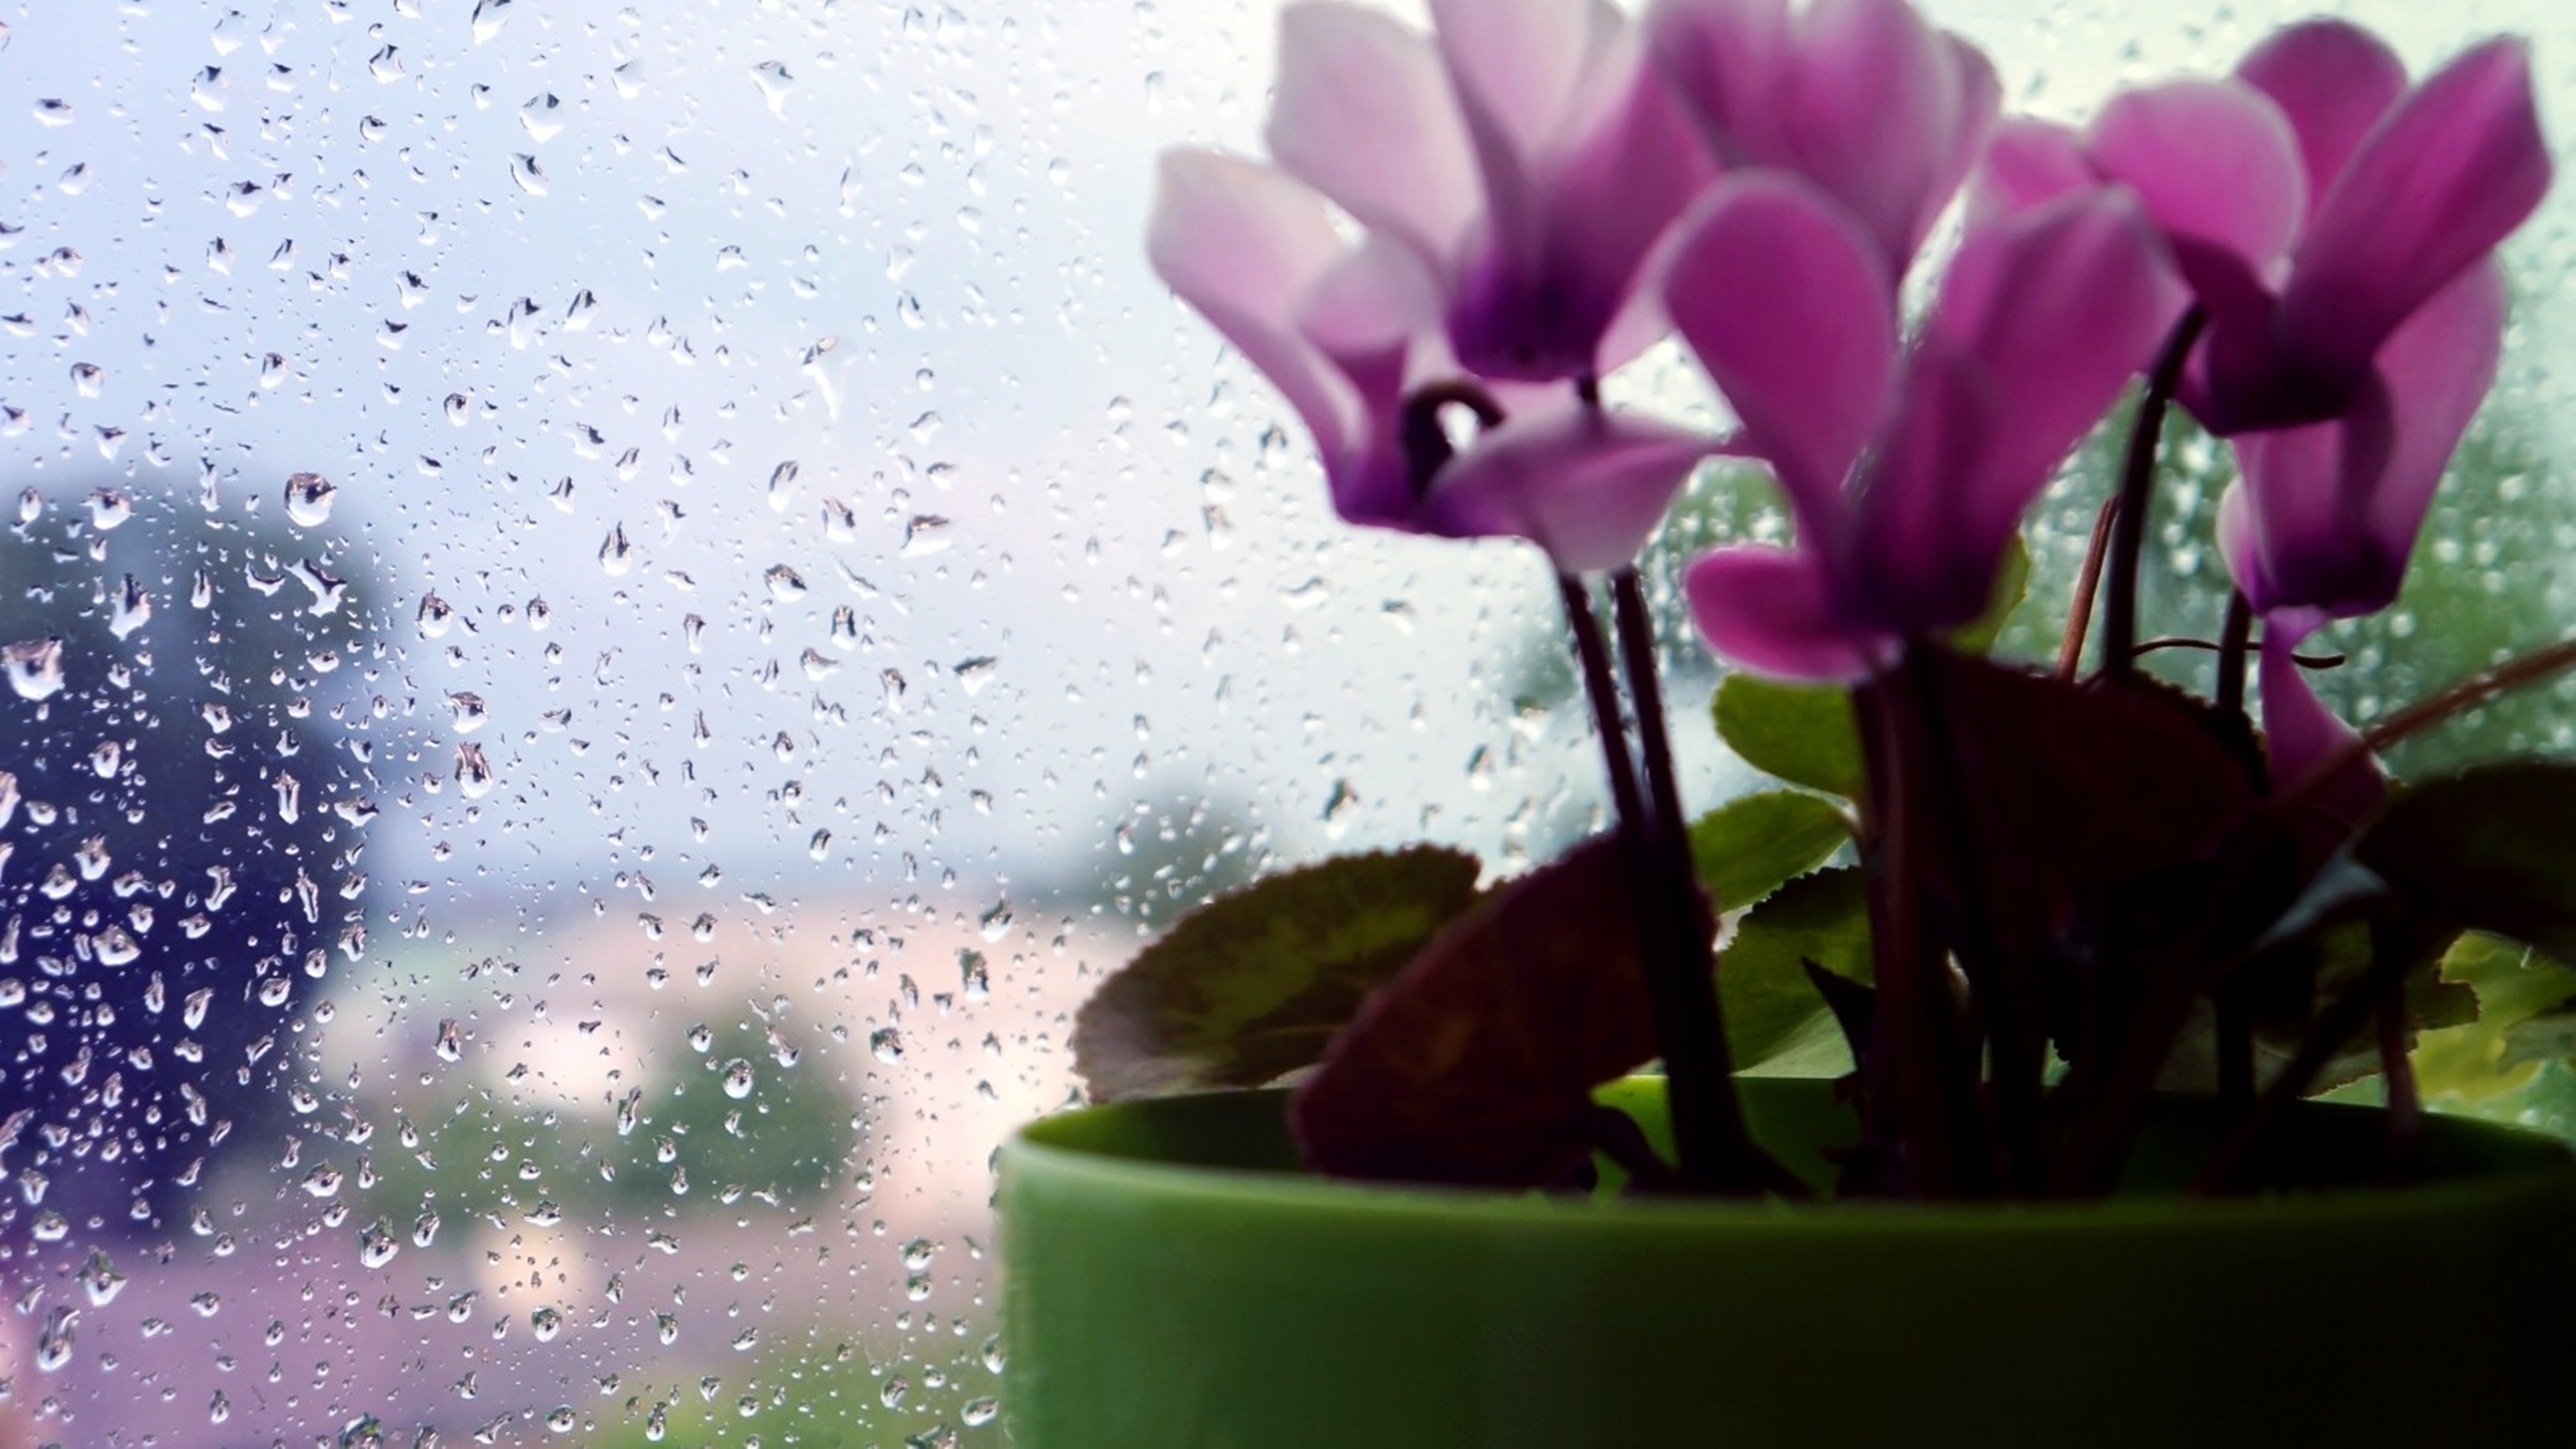 Rain Flowers Images  Free Download on Freepik